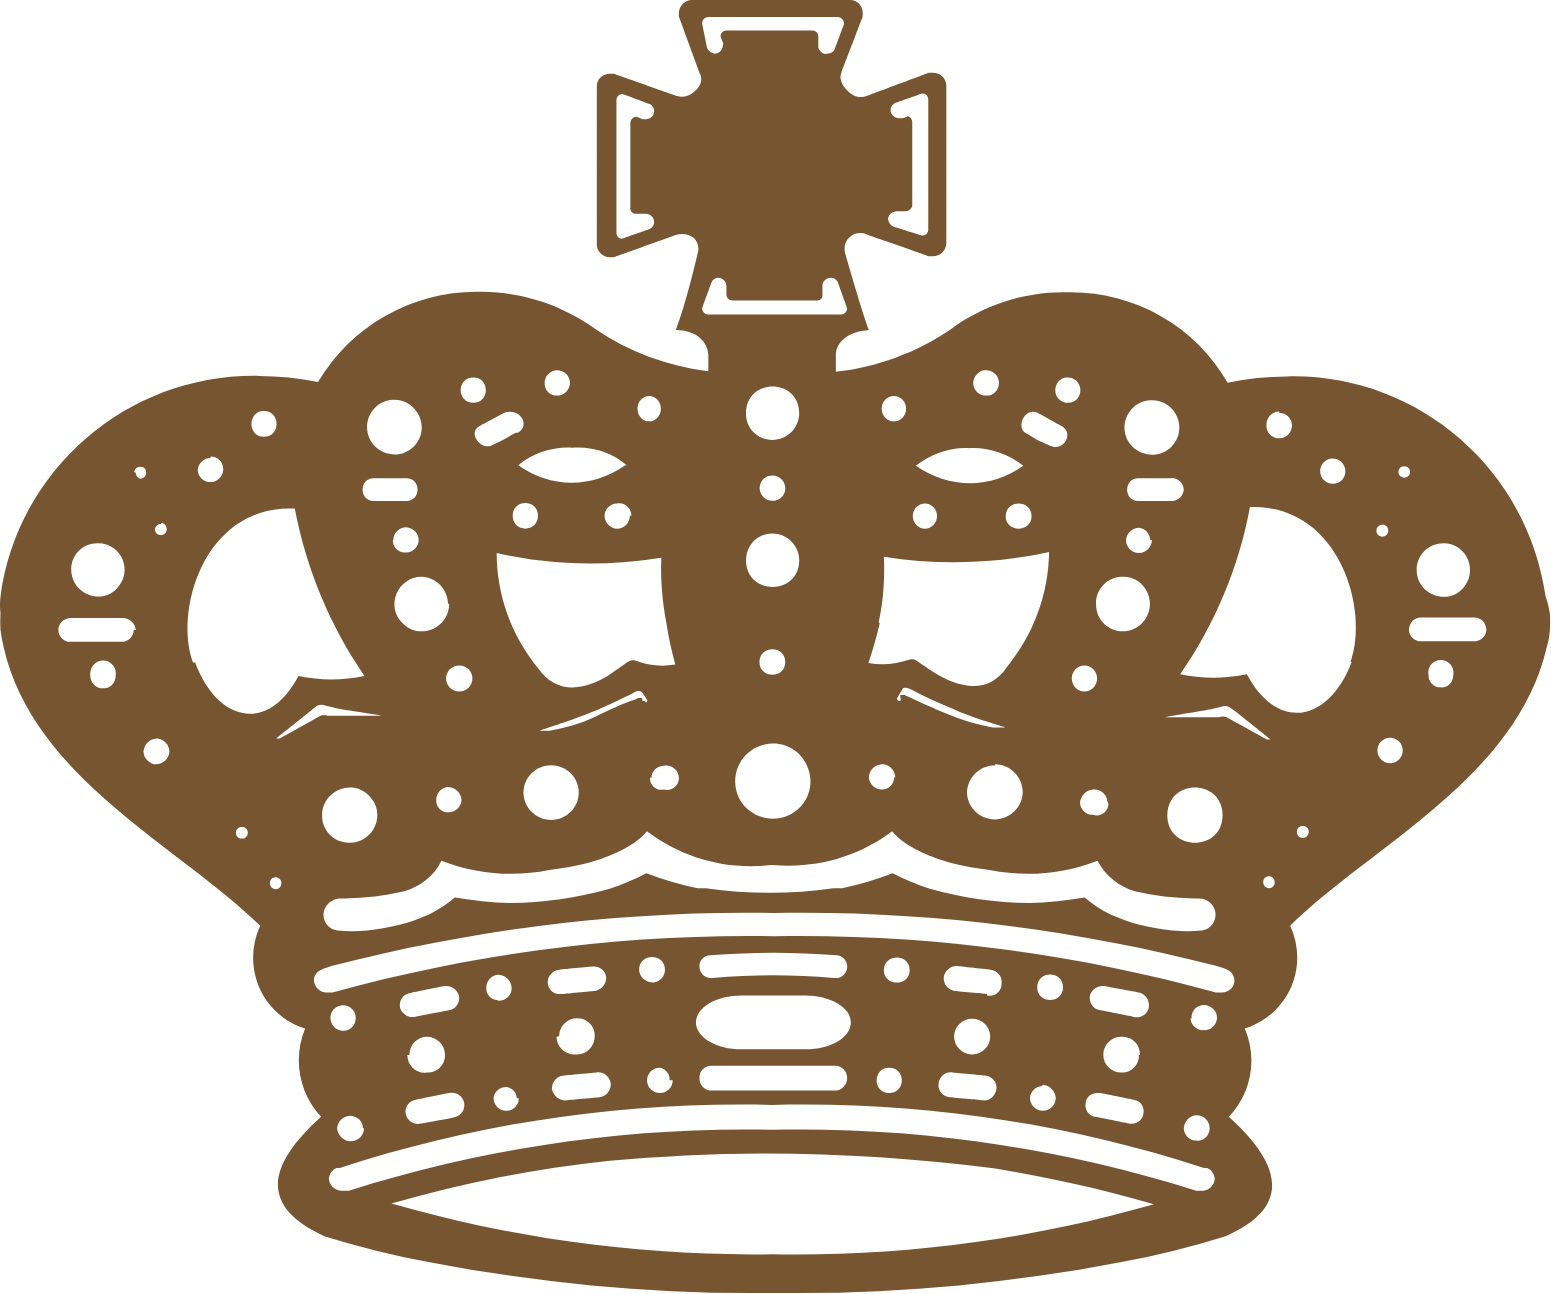 Emperor Watch & Jewellery logo (PNG transparent)